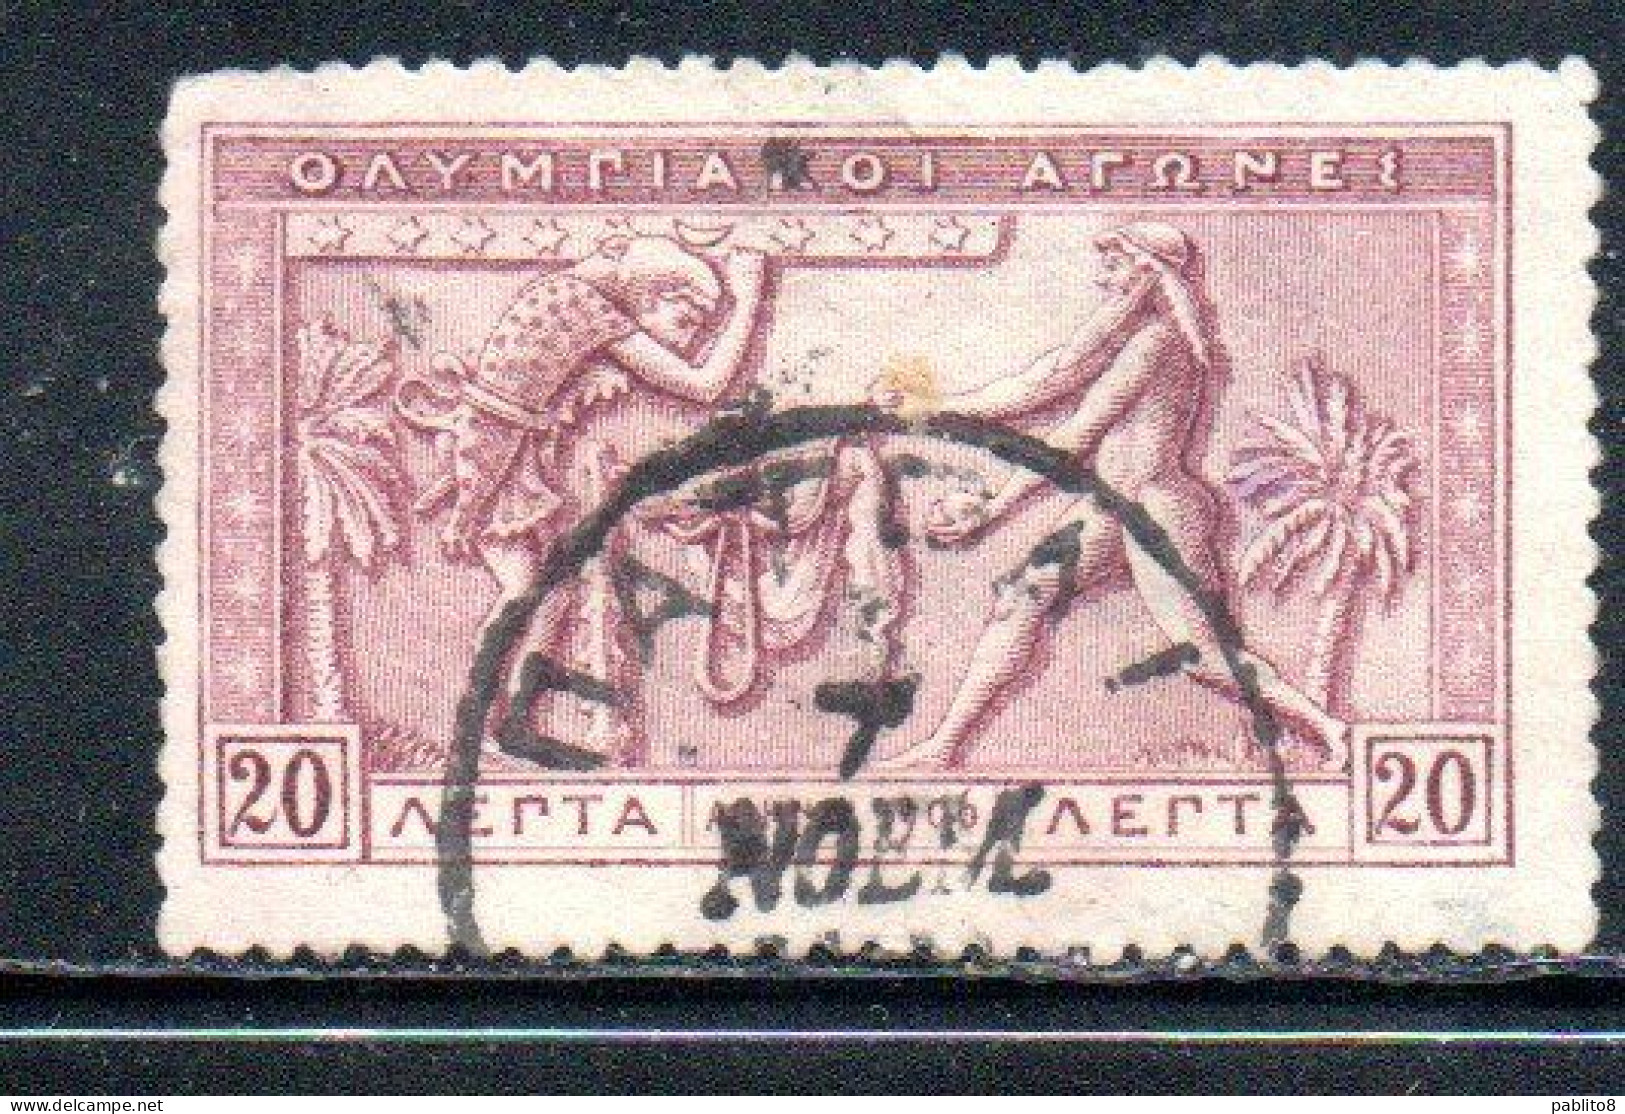 GREECE GRECIA ELLAS 1906 GREEK SPECIAL OLYMPIC GAMES ATHENS ATLAS AND HERCULES 20l USED USATO OBLITERE' - Usati